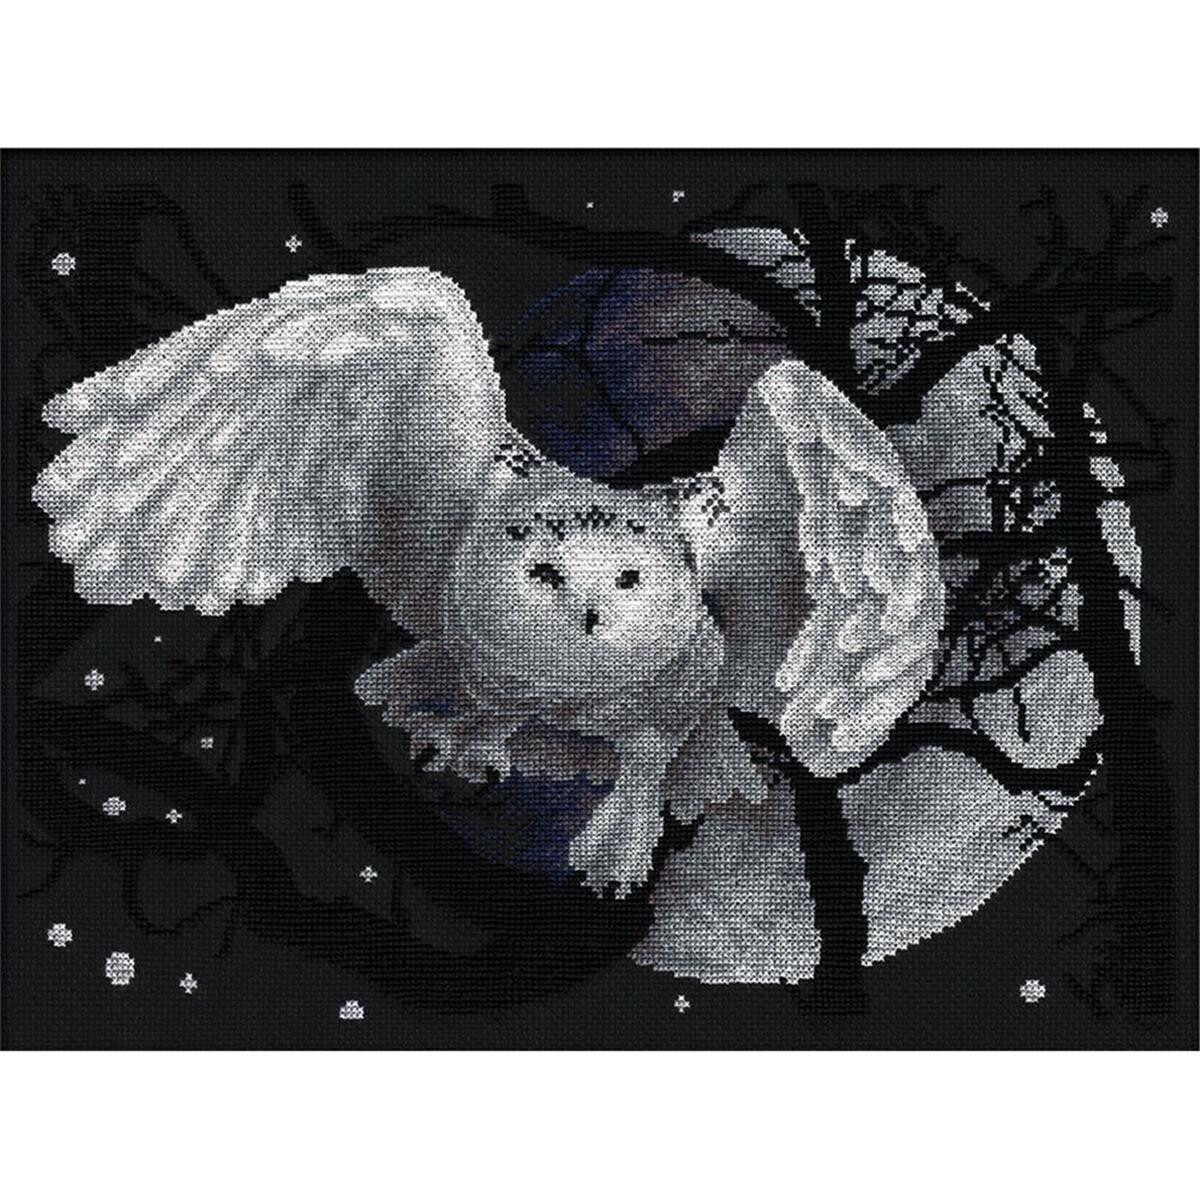 Panna counted cross stitch kit "White Owl"...